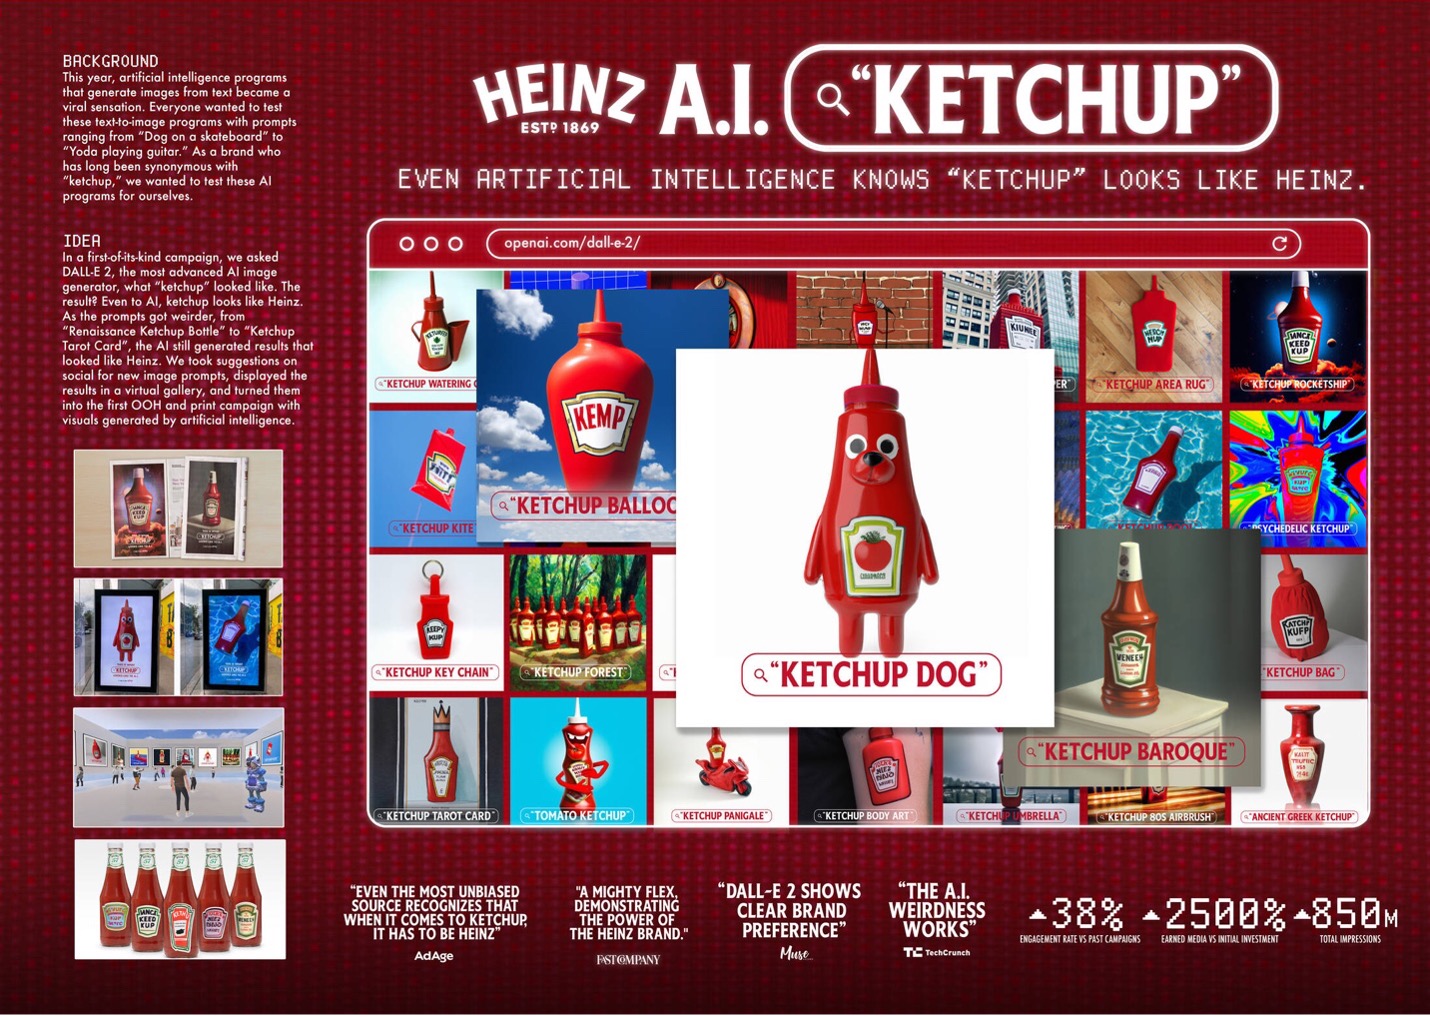 Heinz's AI ketchup campaign